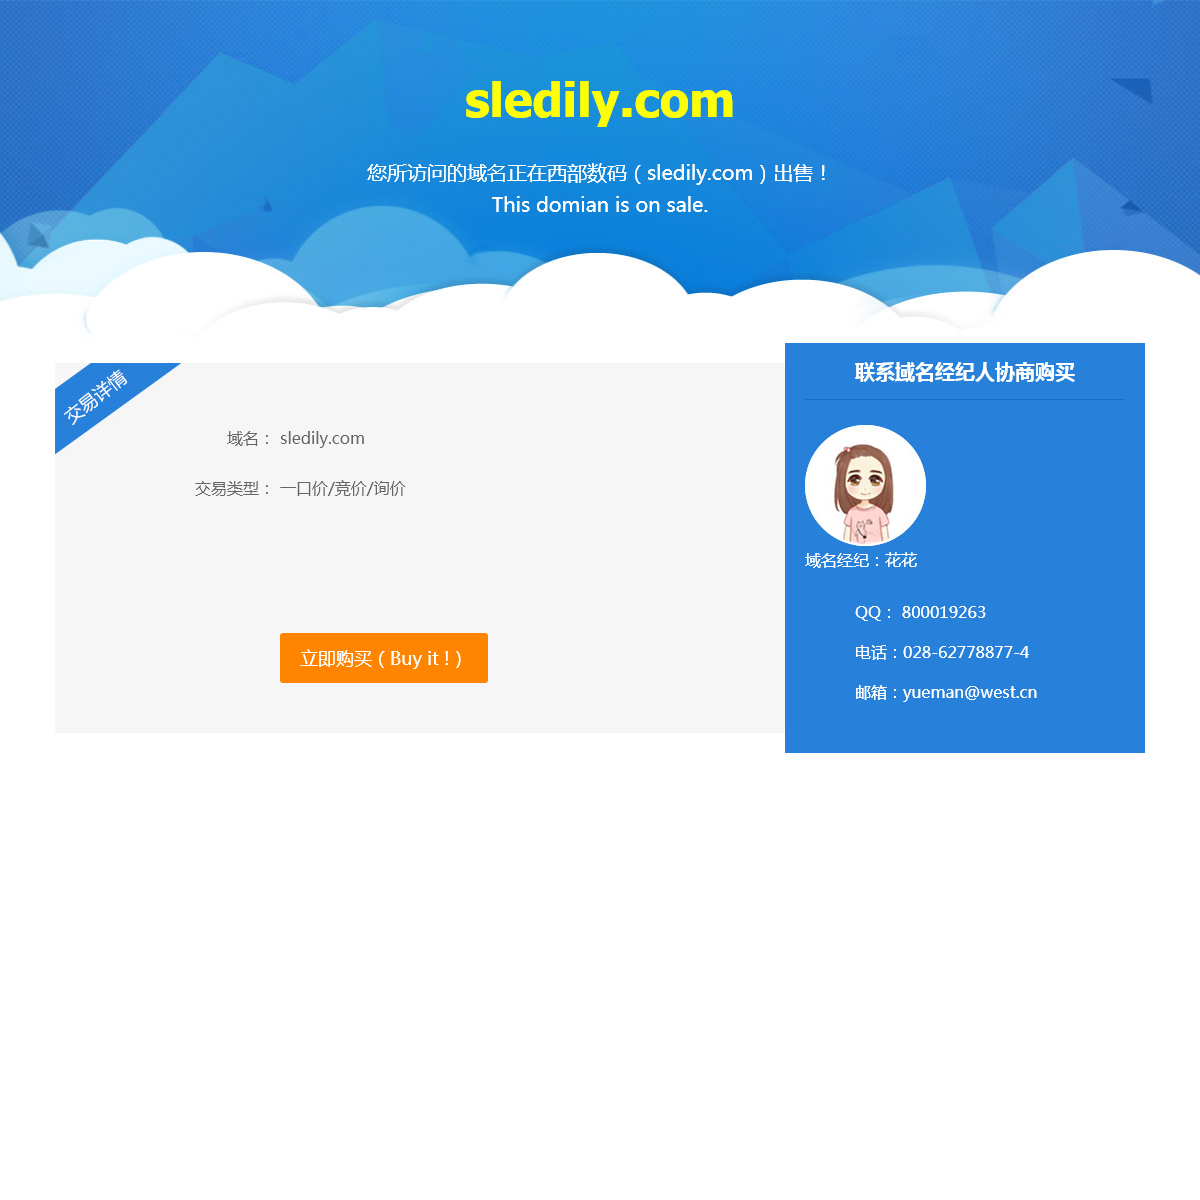 A complete backup of sledily.com